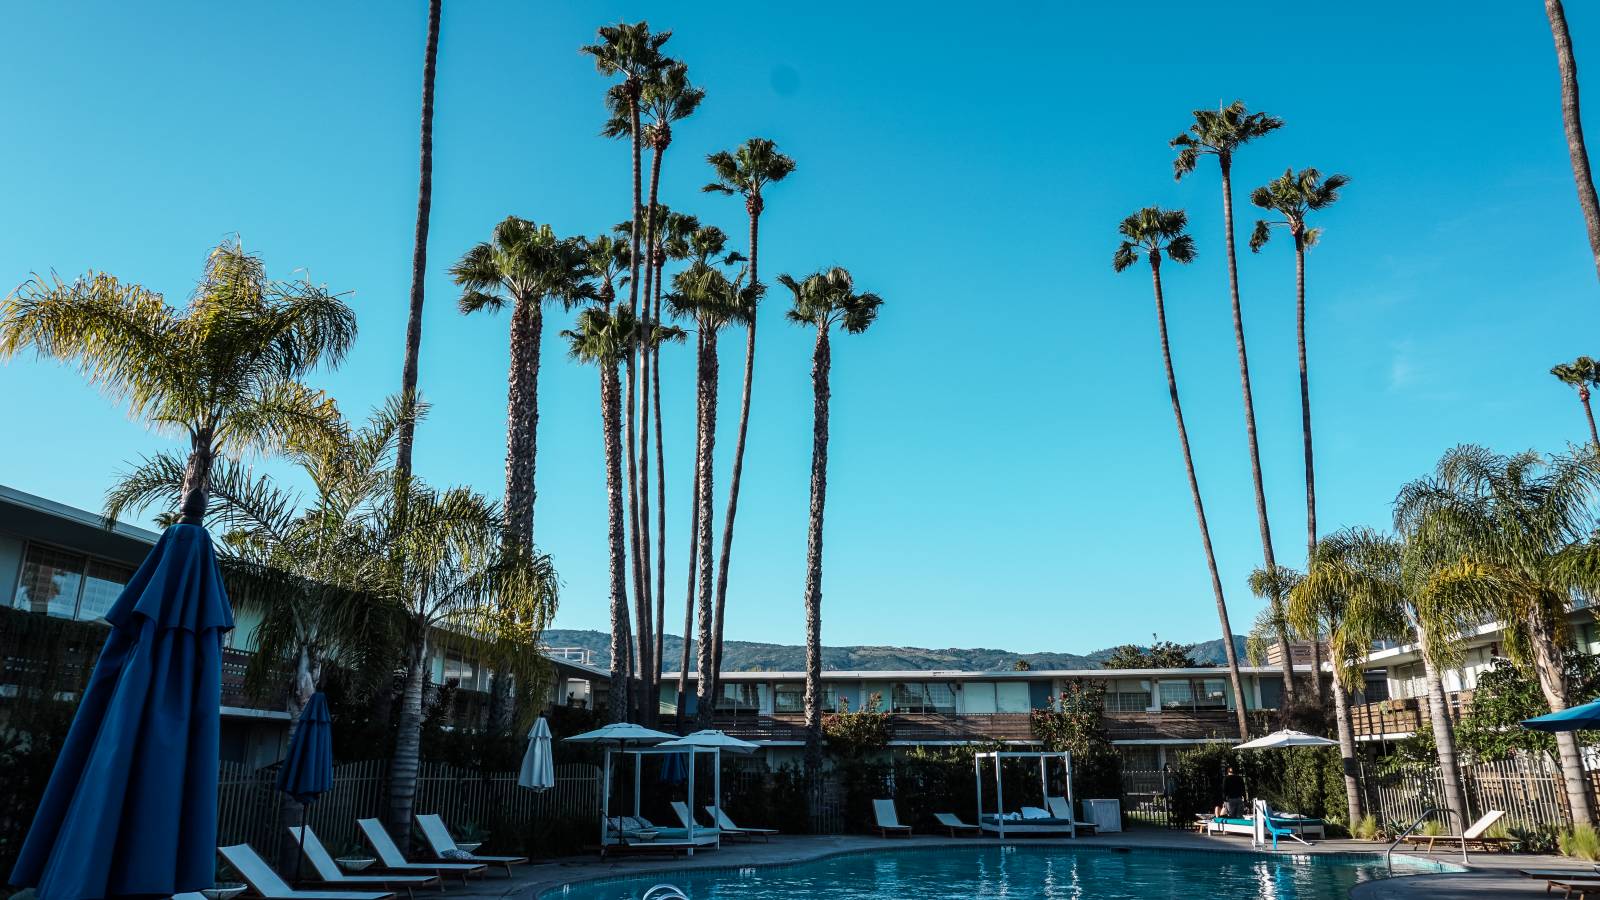 Best Retro Santa Barbara Hotel - The Goodland - Amy Marietta